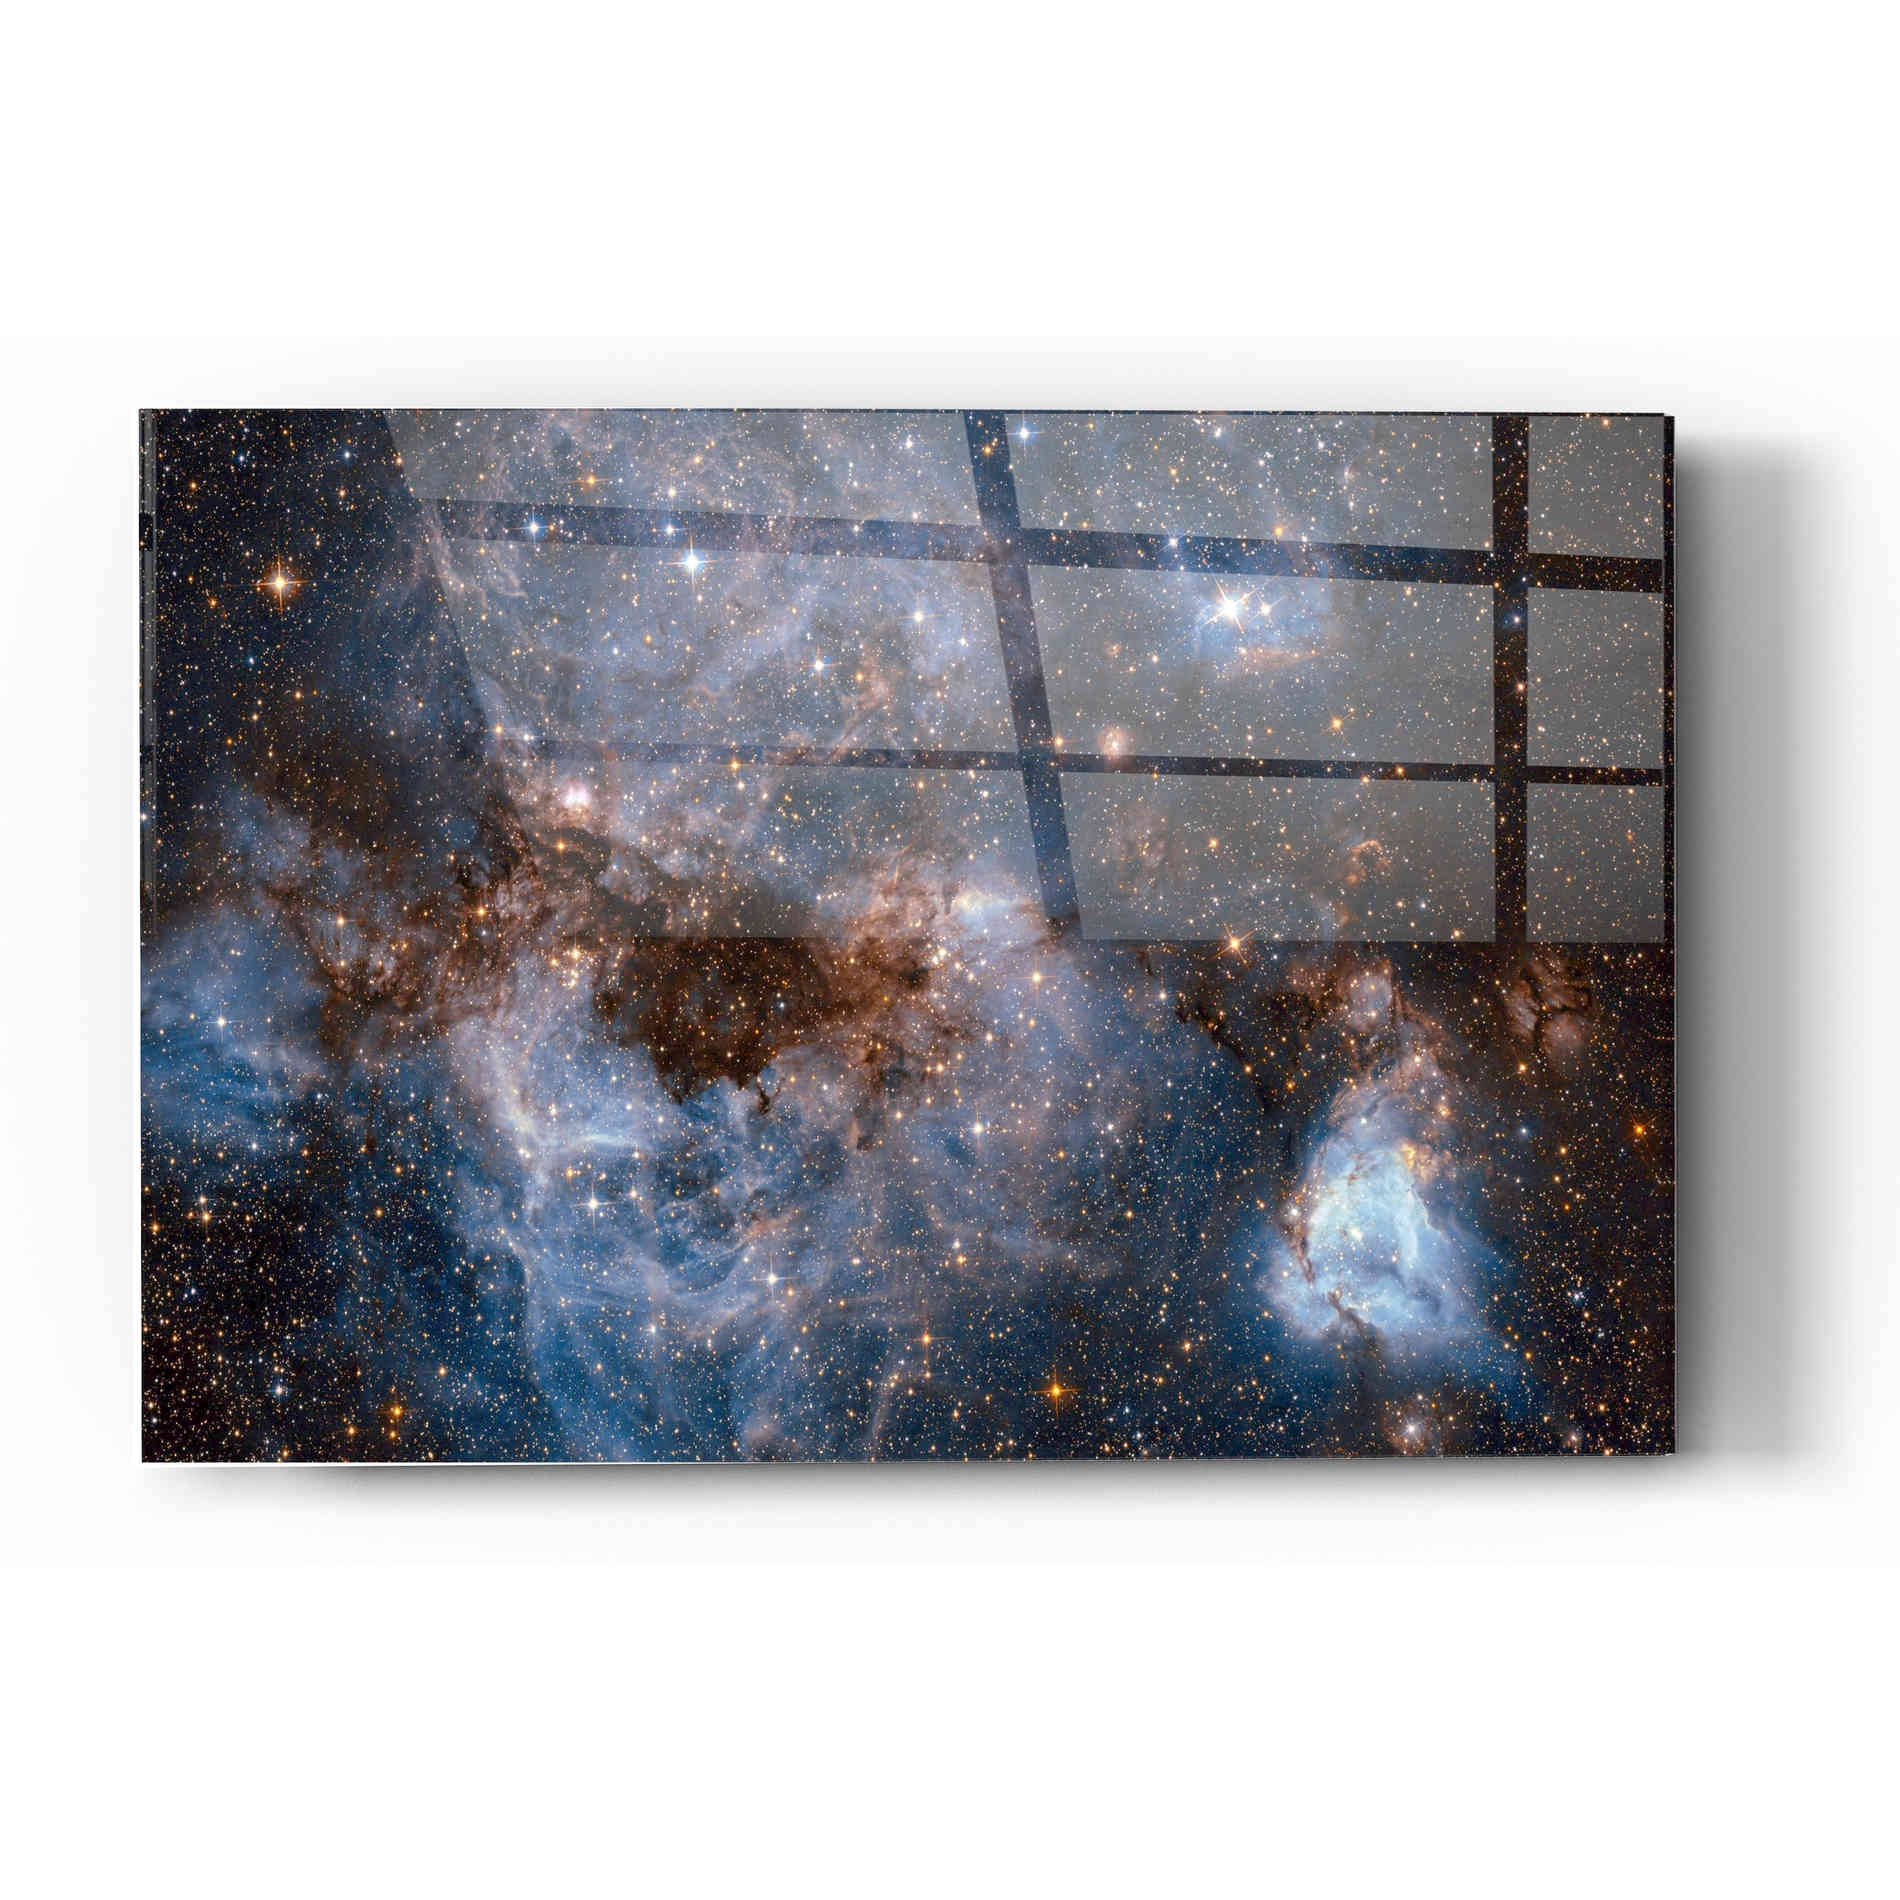 Epic Art 'Maelstrom Cloud' Hubble Space Telescope Acrylic Glass Wall Art,16x24